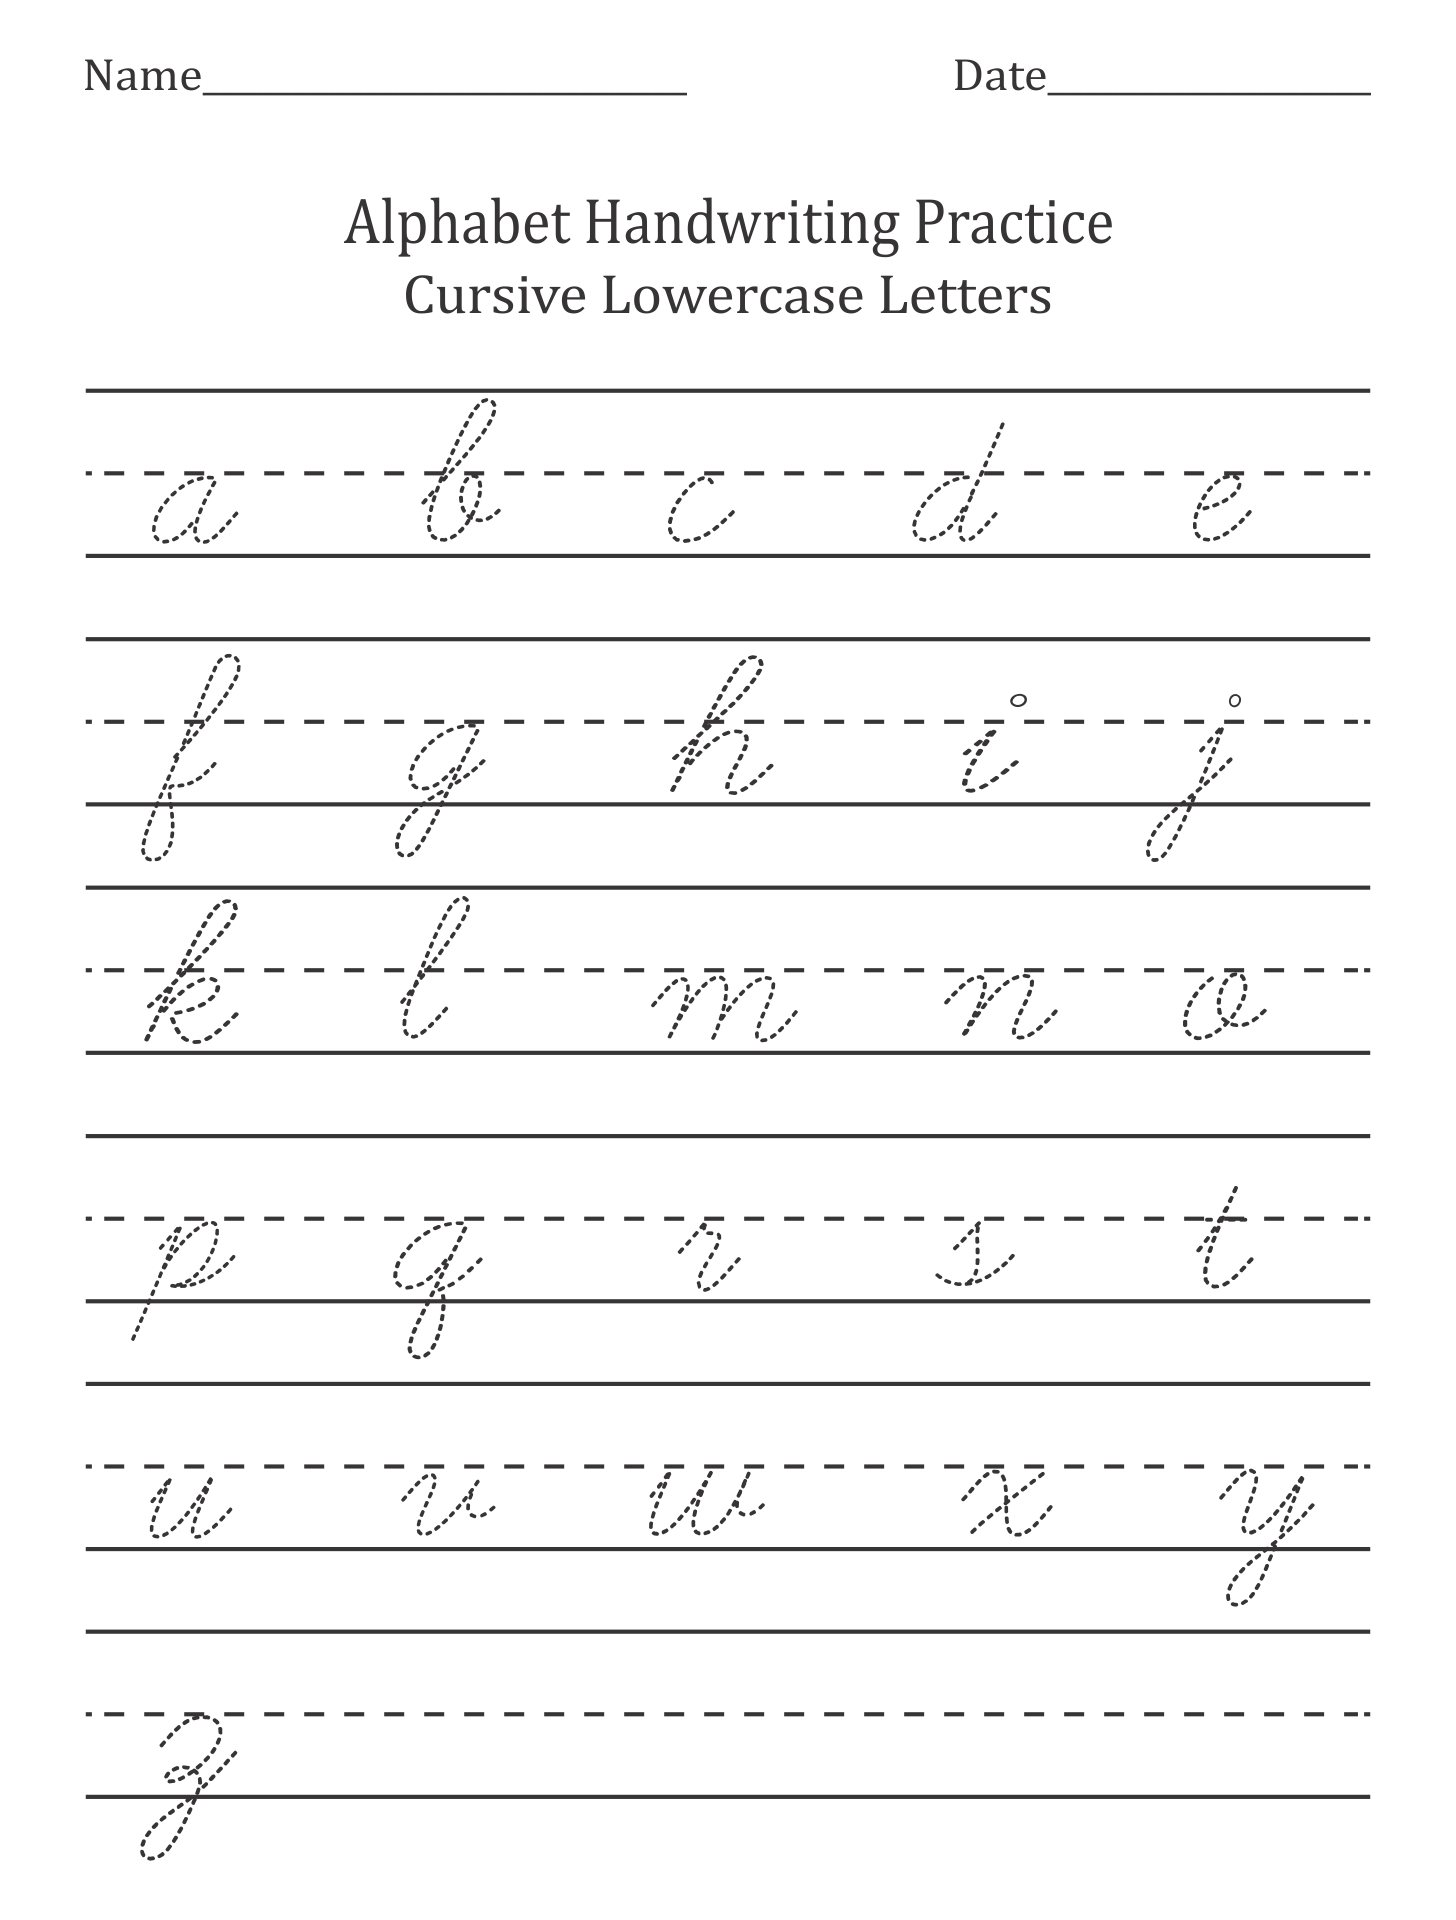 printable-cursive-handwriting-practice